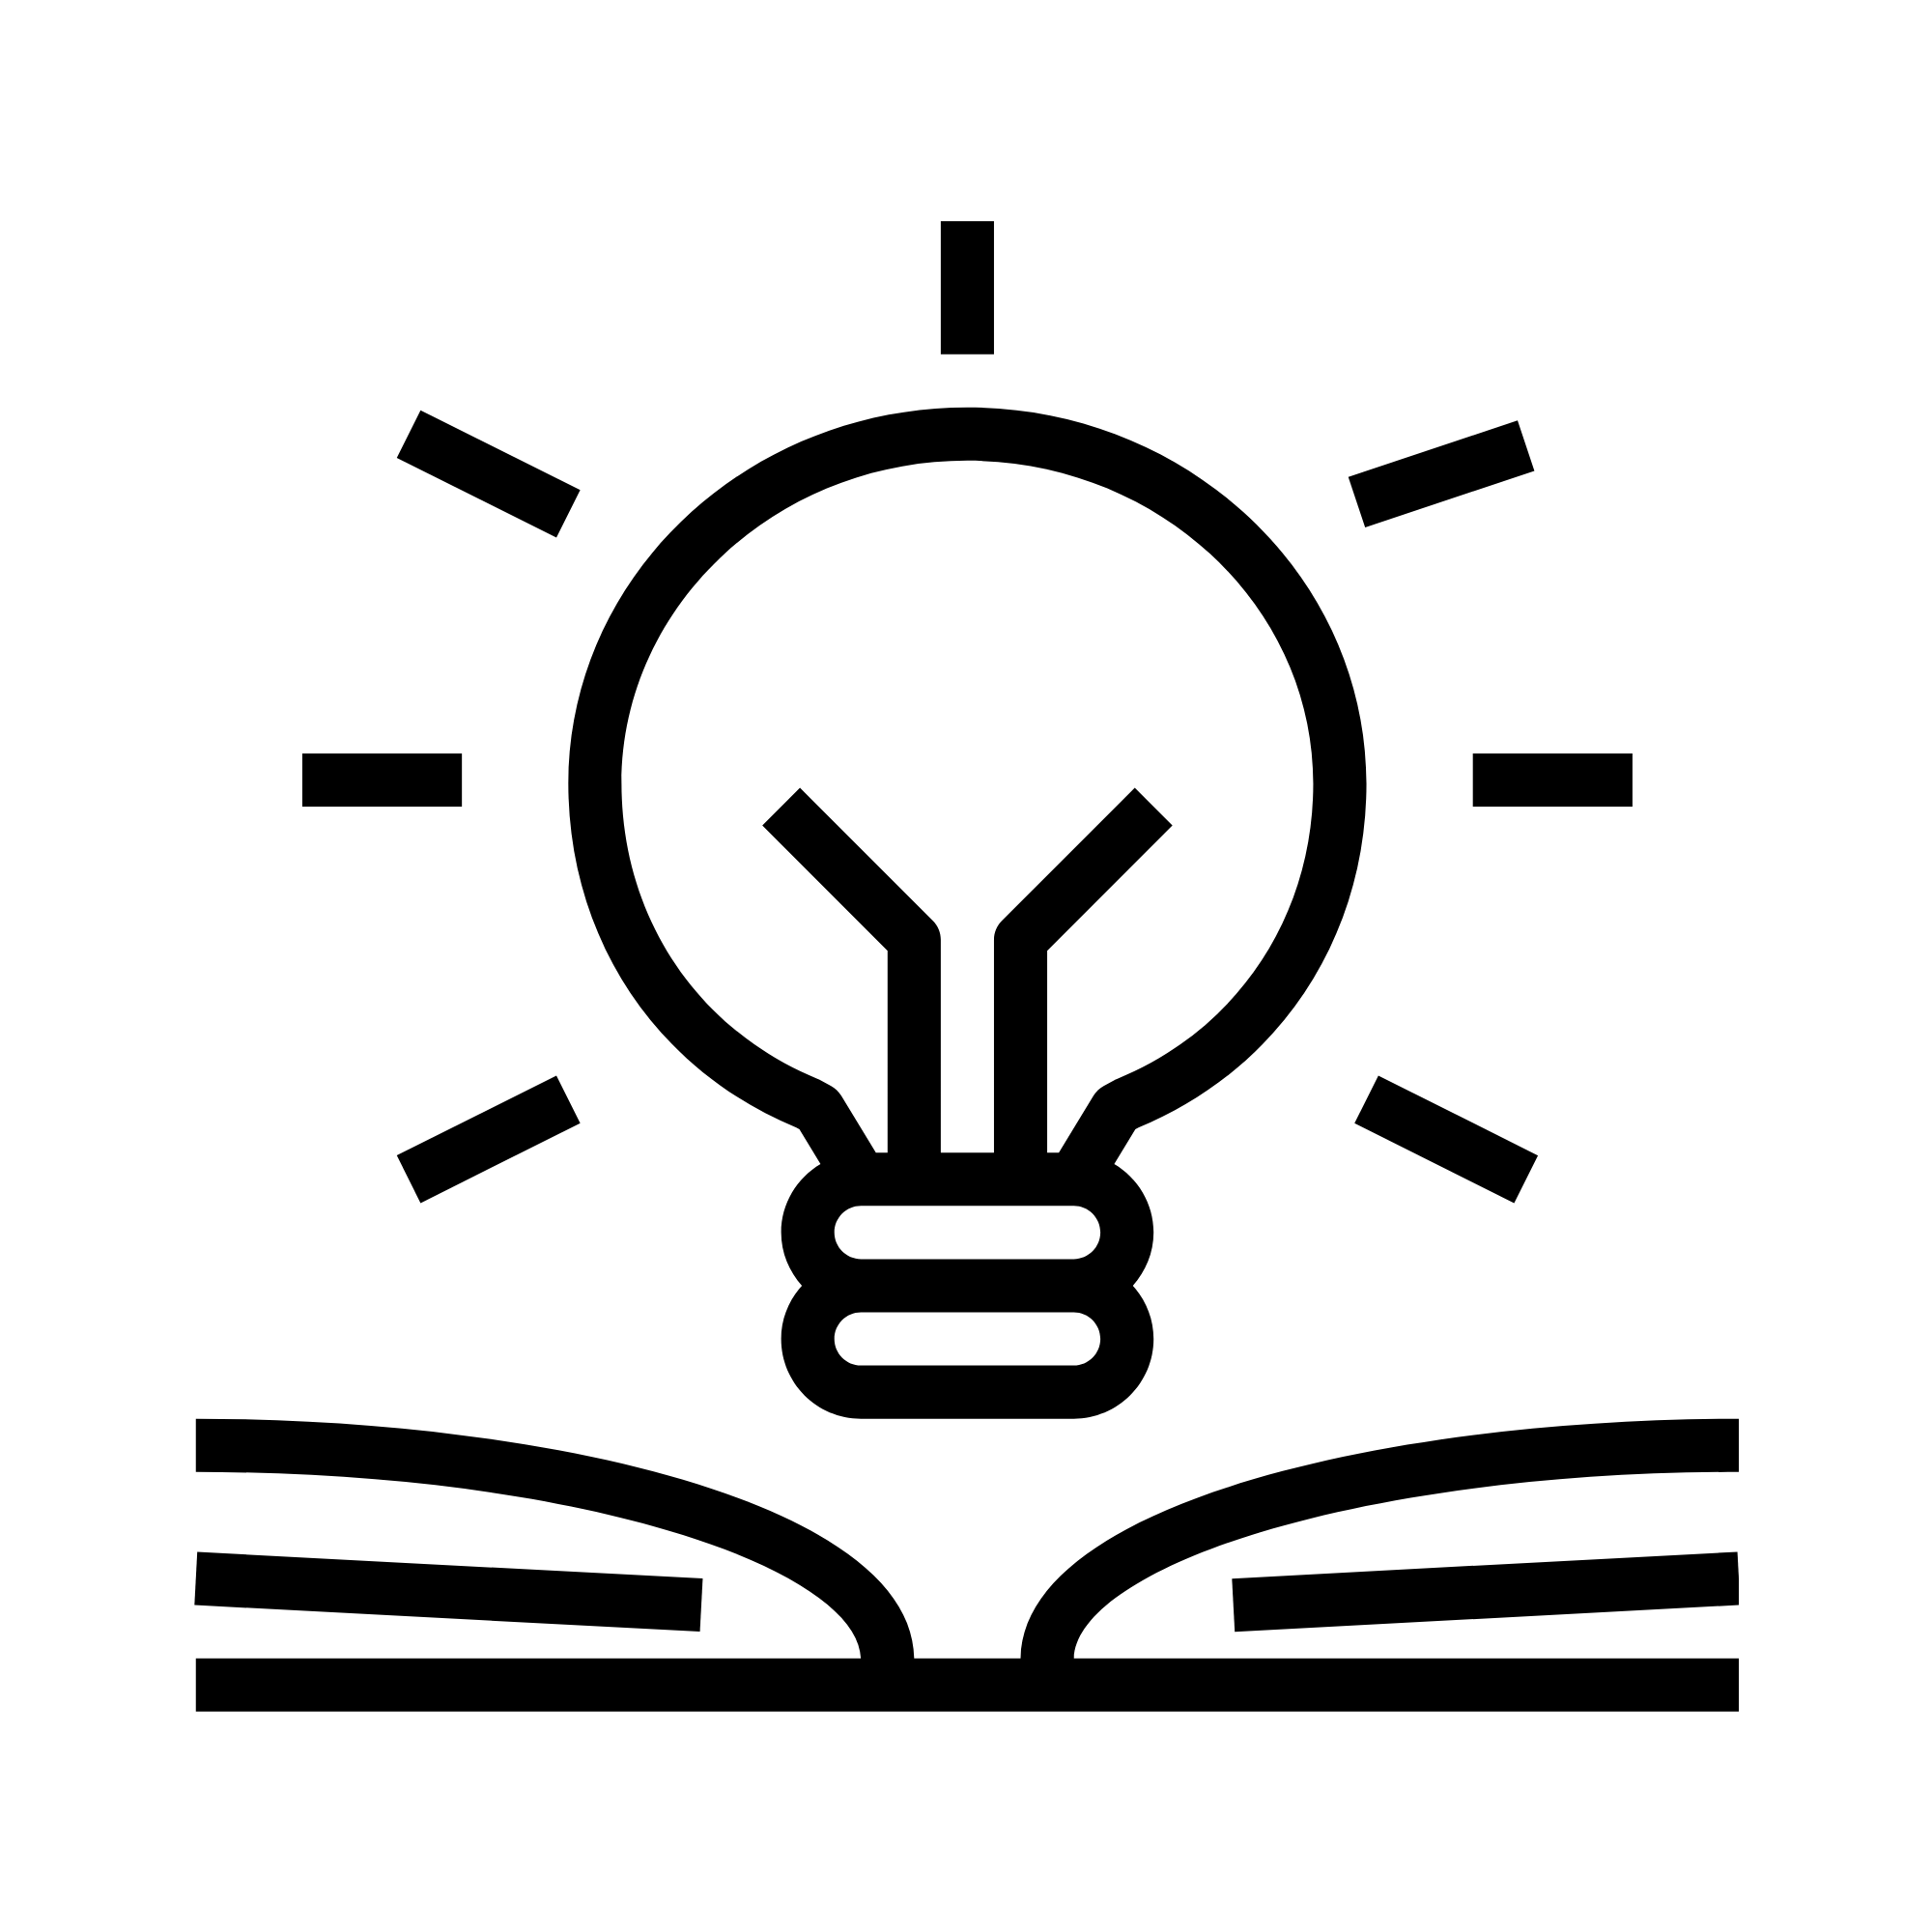 A lightbulb icon symbolising innovation and bright ideas, representing IMDA's AIM Graduate Development Programme